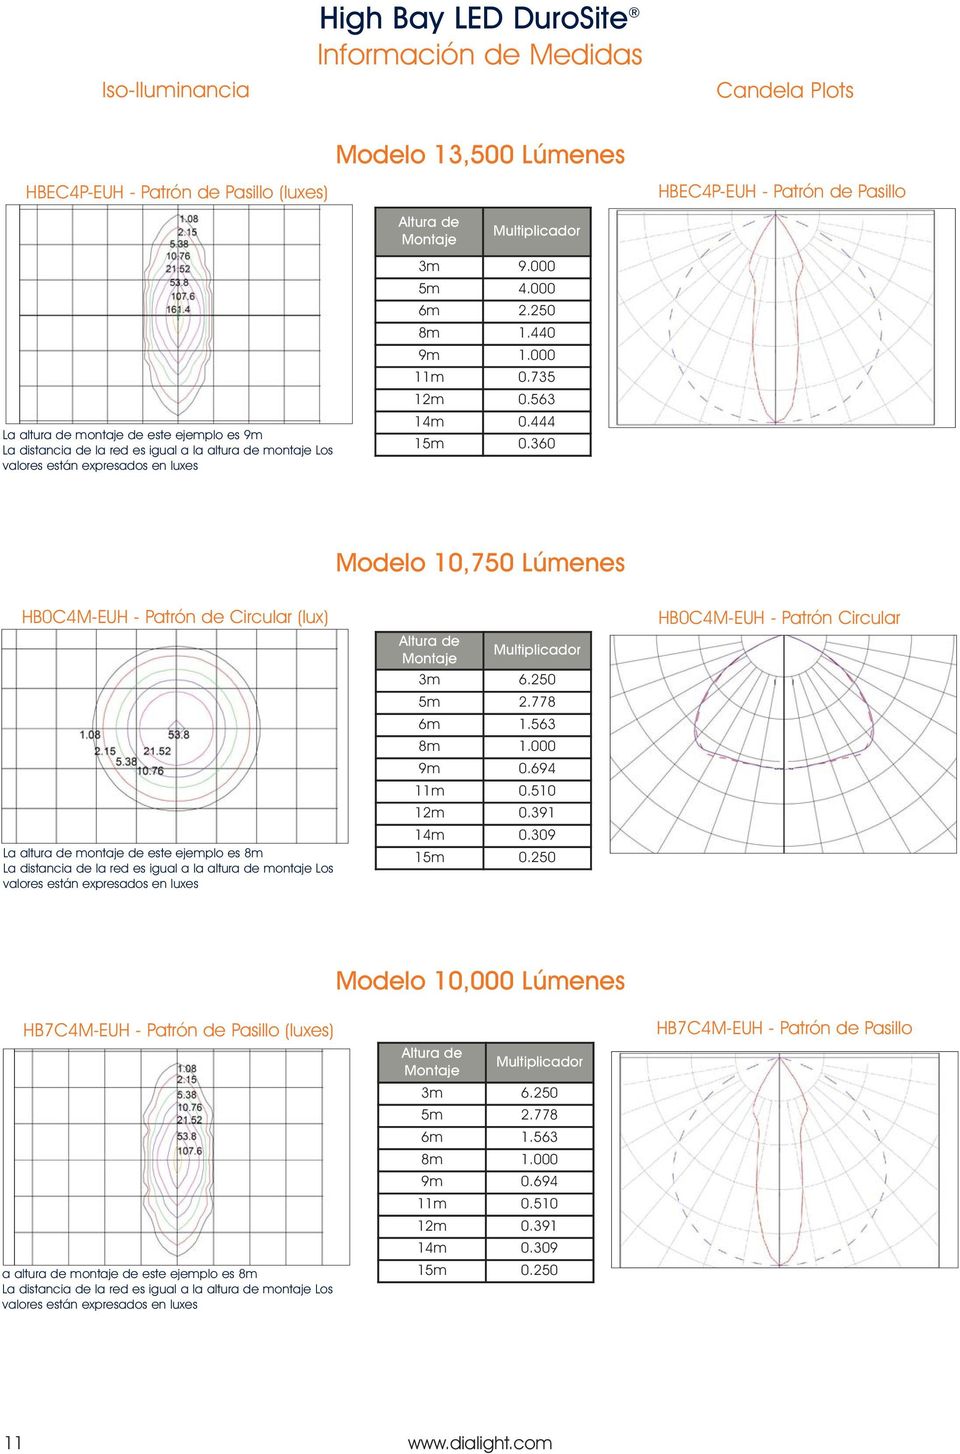 360 Modelo 10,750 Lúmenes HB0C4M-EUH - Patrón de Circular (lux) La altura de montaje de este ejemplo es 8m 3m 6.250 5m 2.778 6m 1.563 8m 1.000 9m 0.694 11m 0.510 12m 0.391 14m 0.